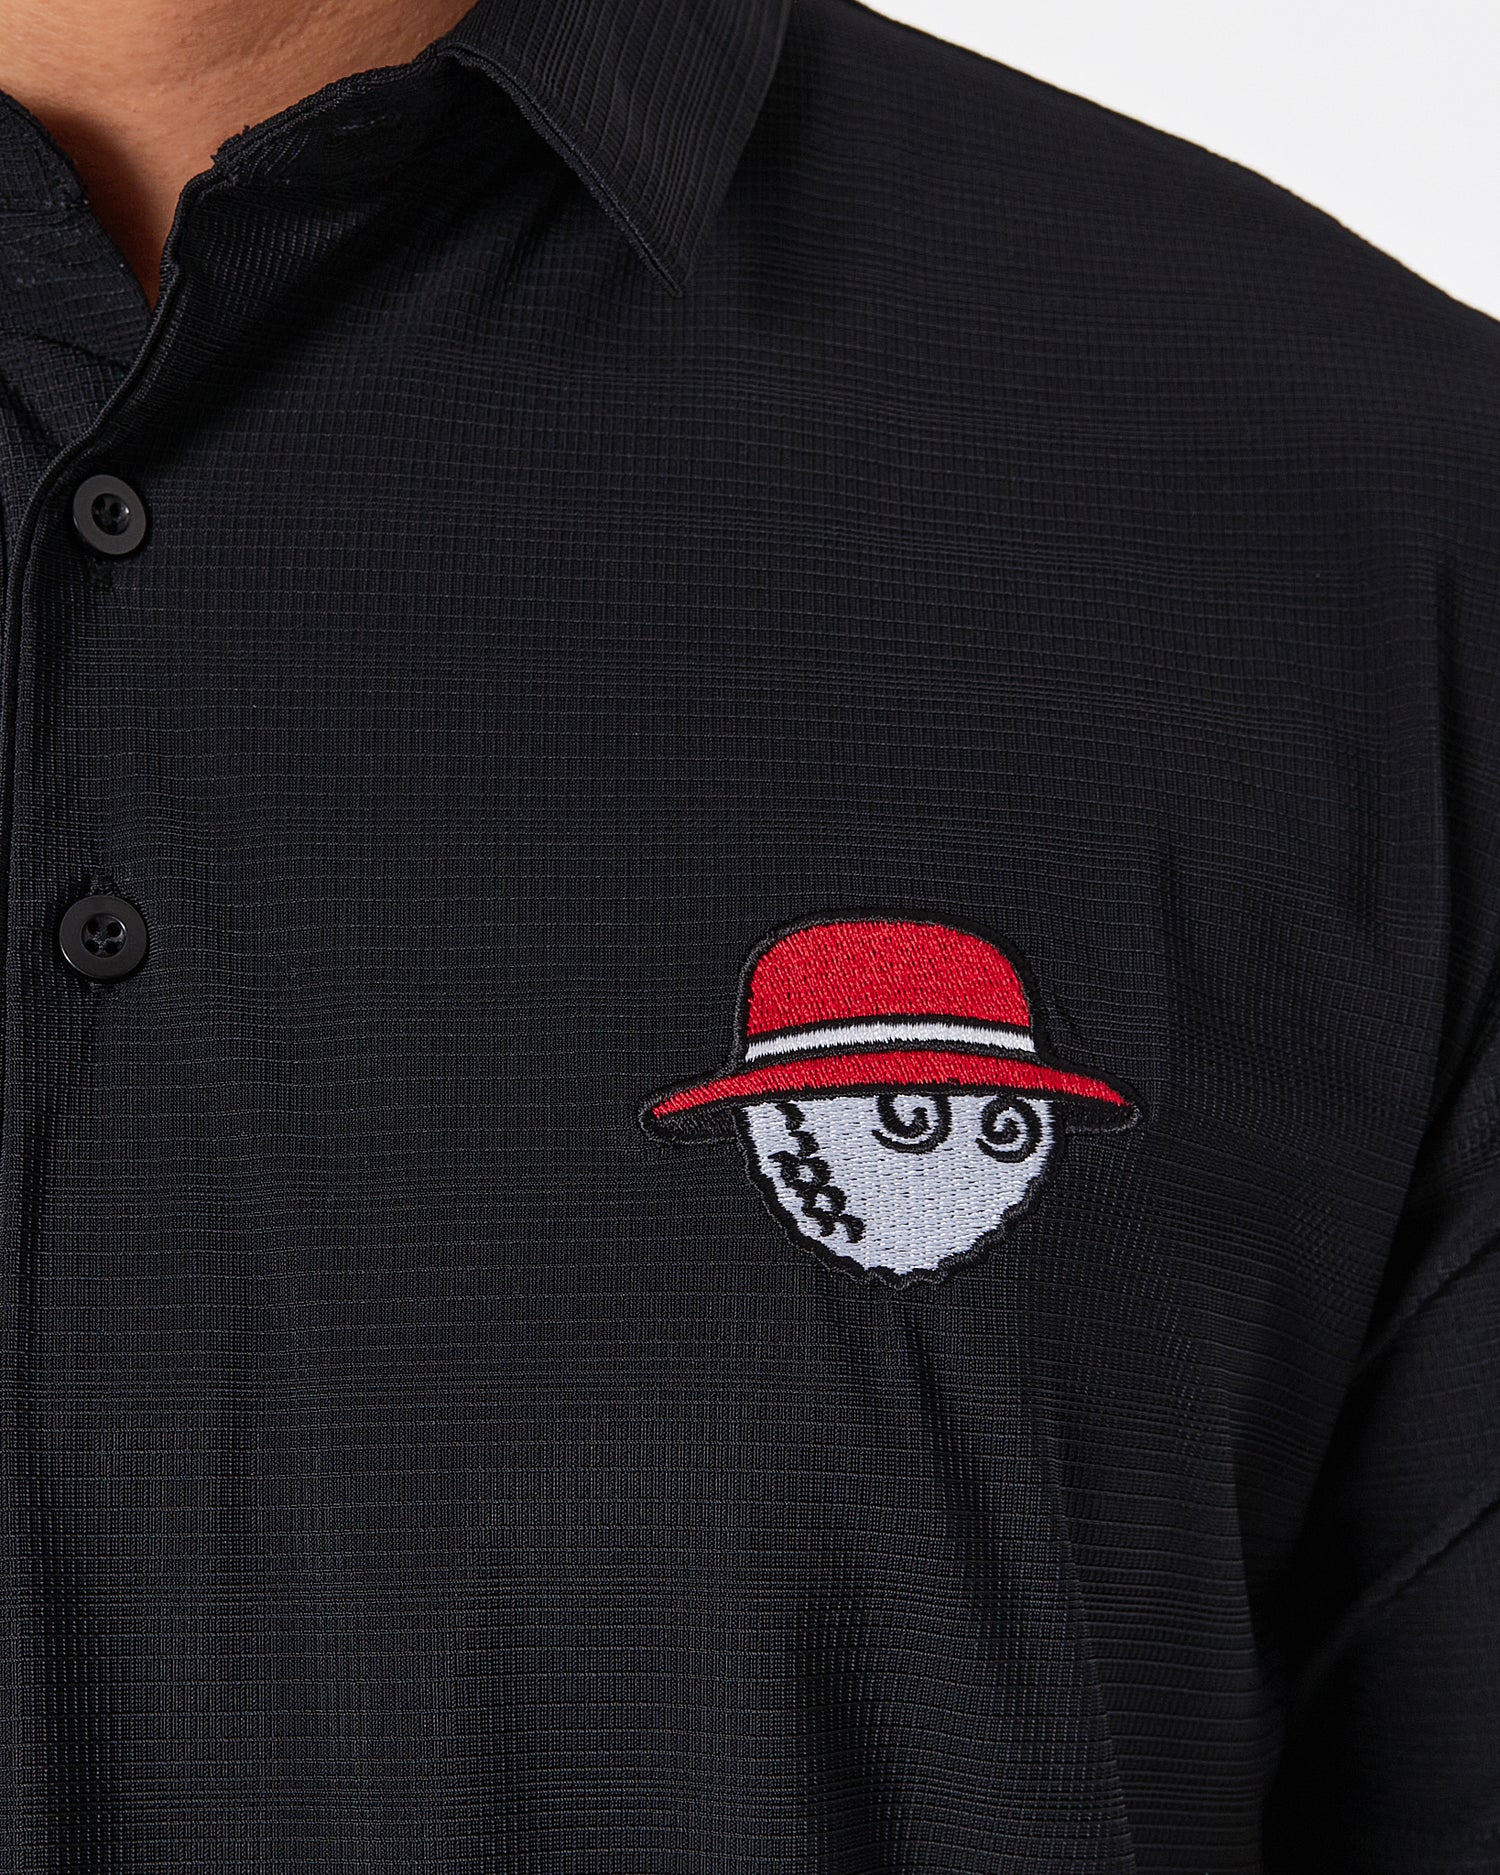 MAL Cartoon Embroidered Men Black Sport Polo Shirt 19.90